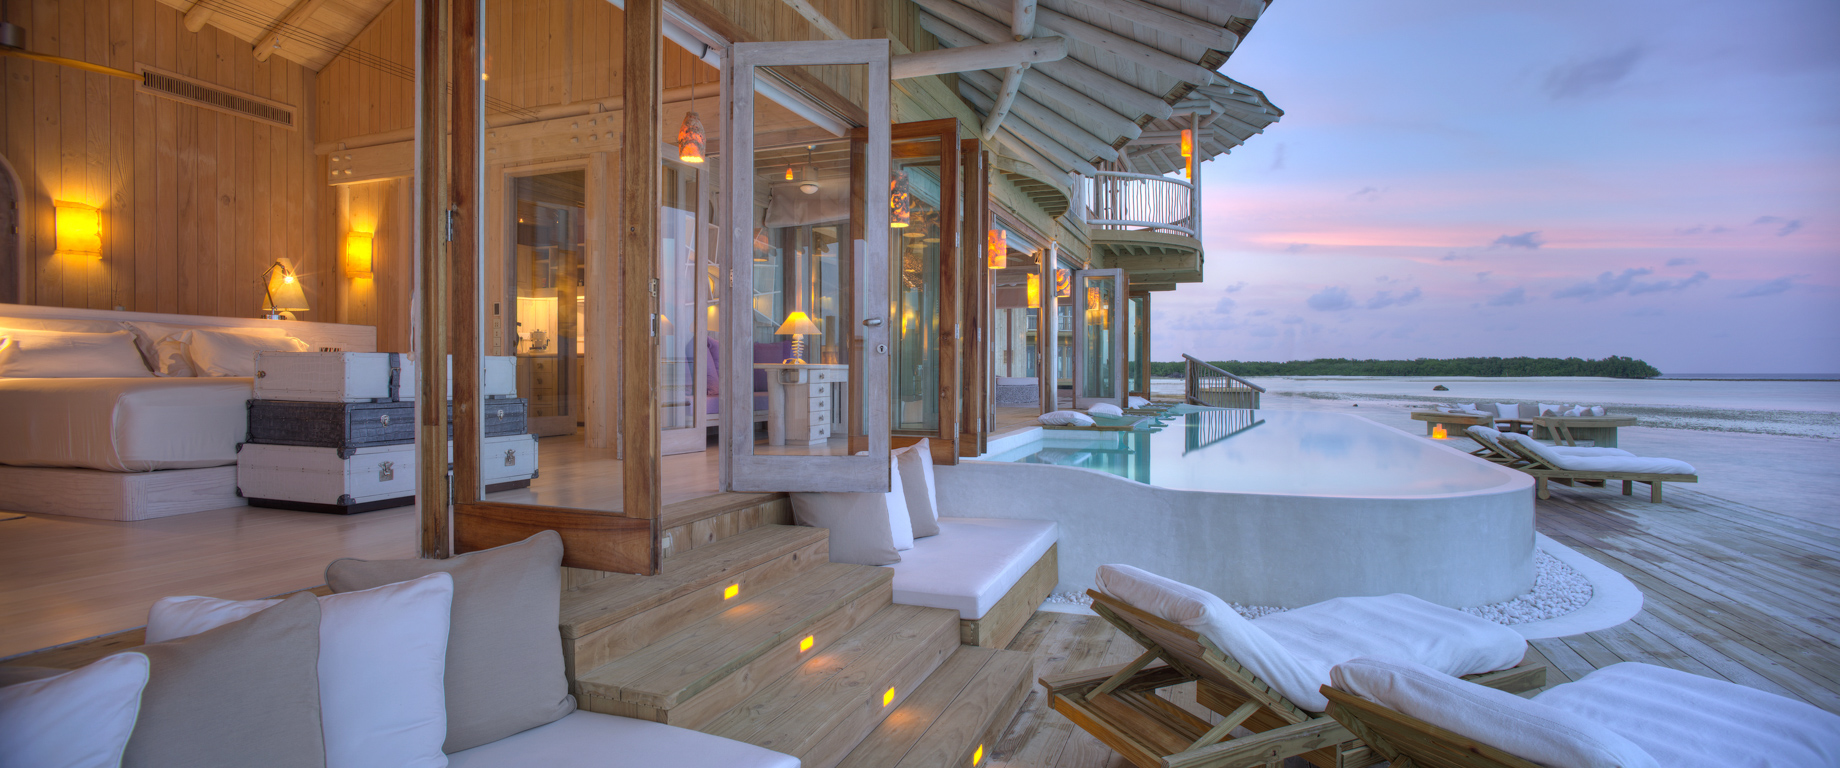 Soneva Jani Resort – Noonu Atoll, Medhufaru, Maldives – Overwater Villa Pool Deck Sunset